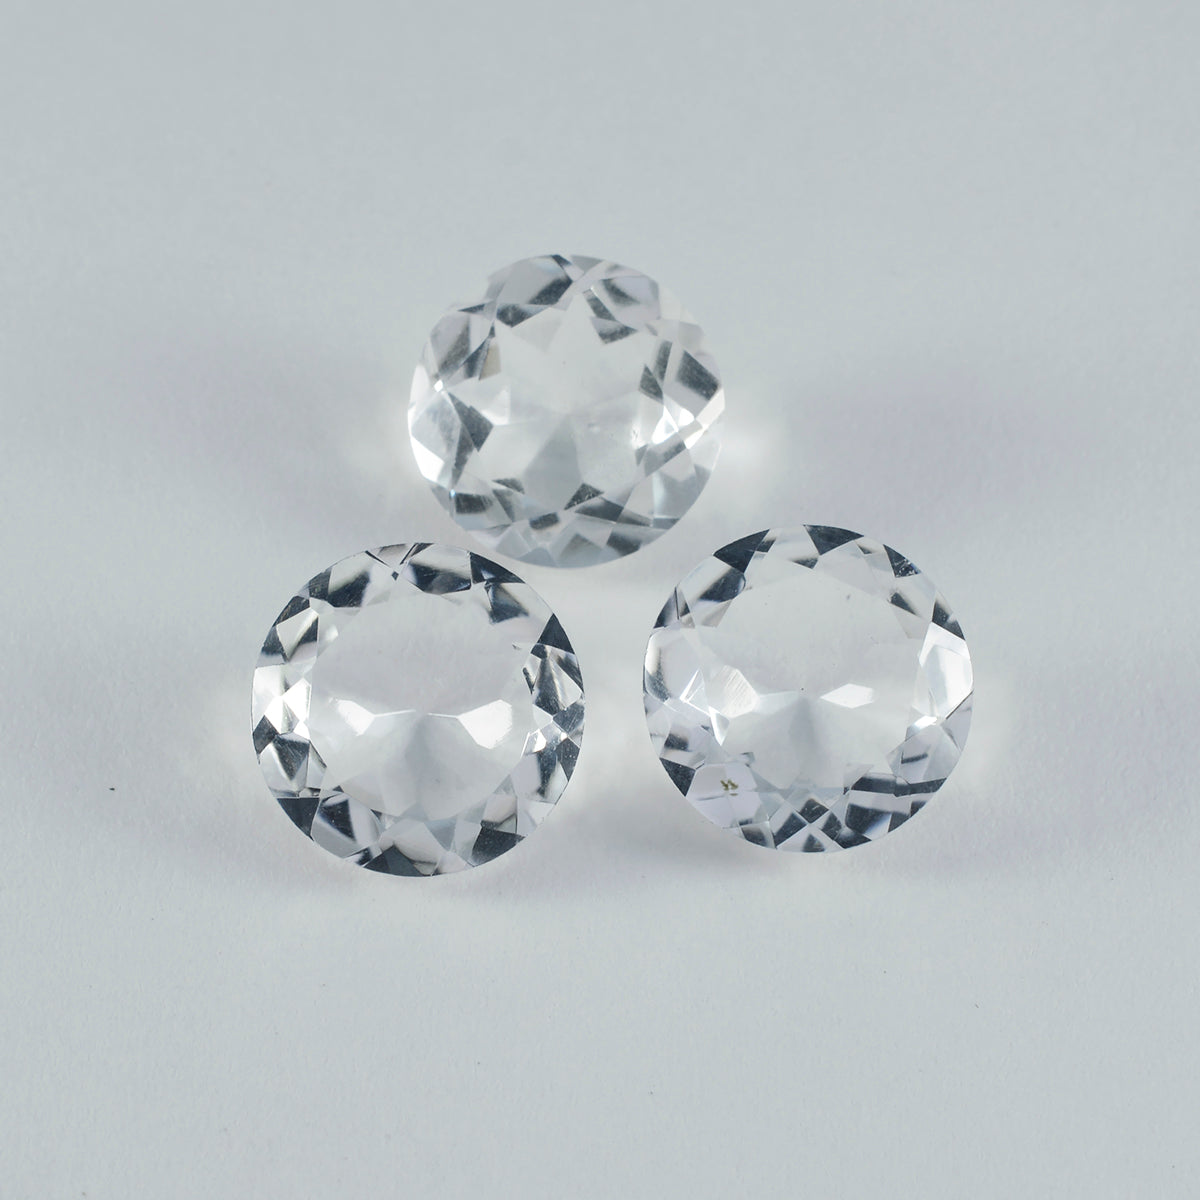 riyogems 1шт белый кристалл кварца ограненный 14х14 мм круглая форма камень хорошего качества